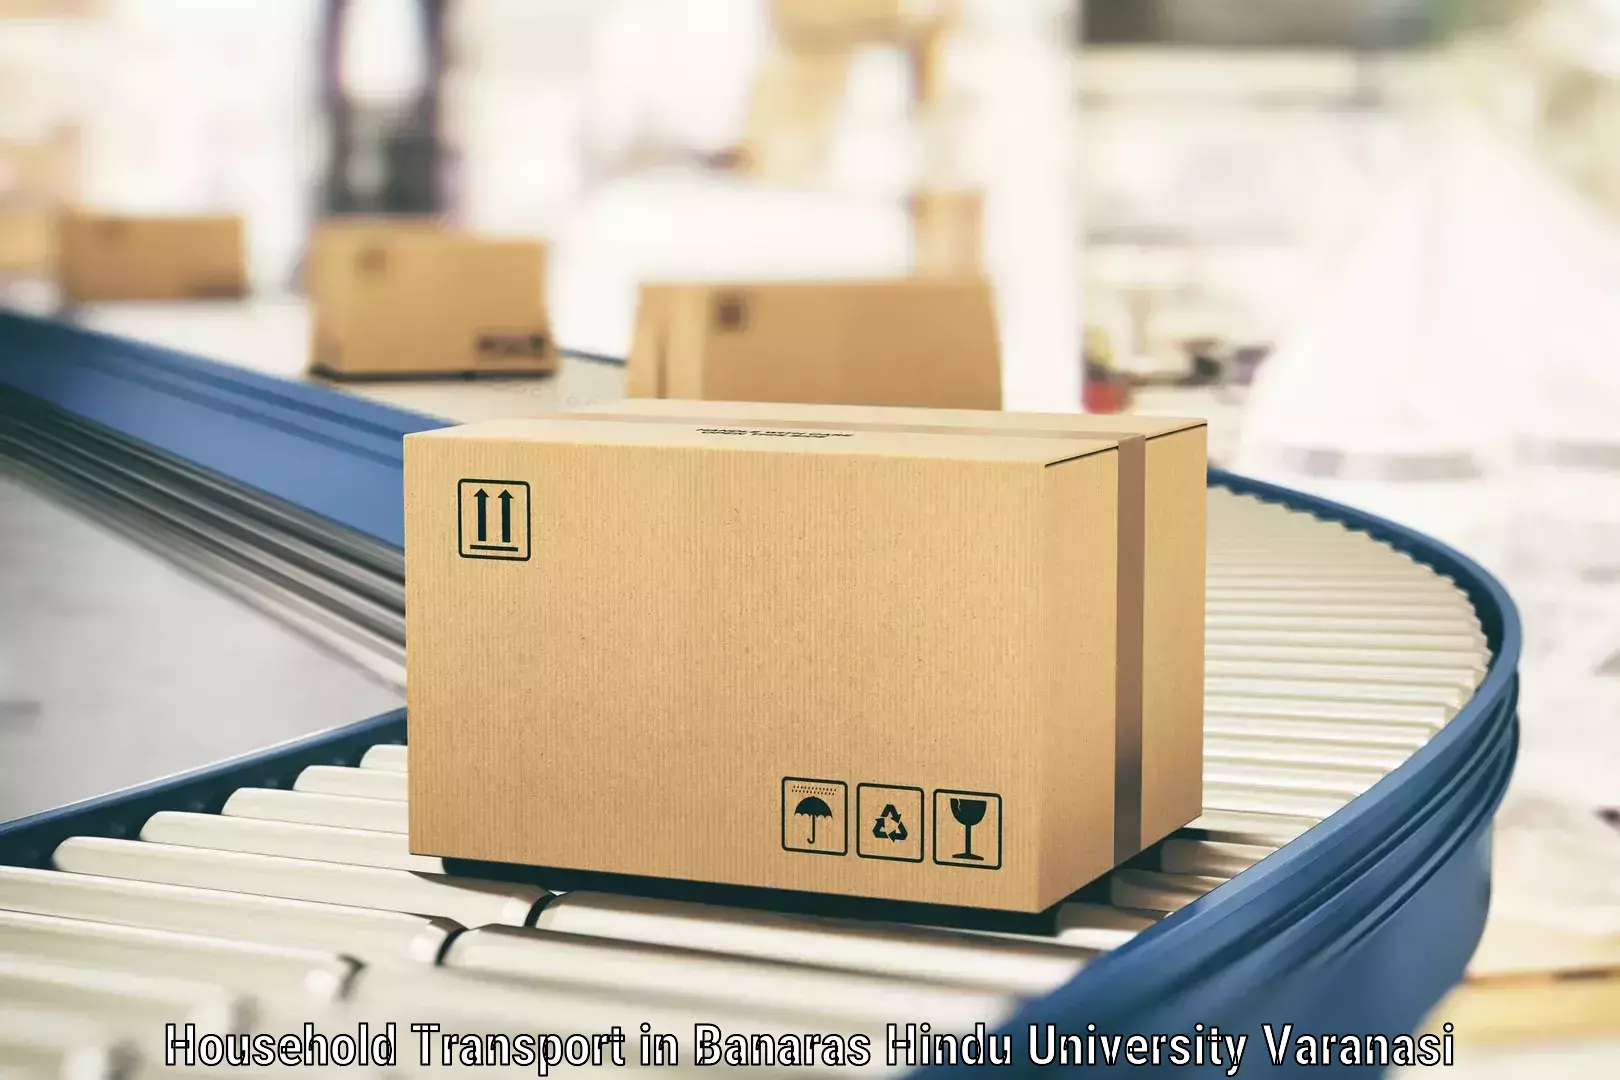 Furniture transport and storage in Banaras Hindu University Varanasi